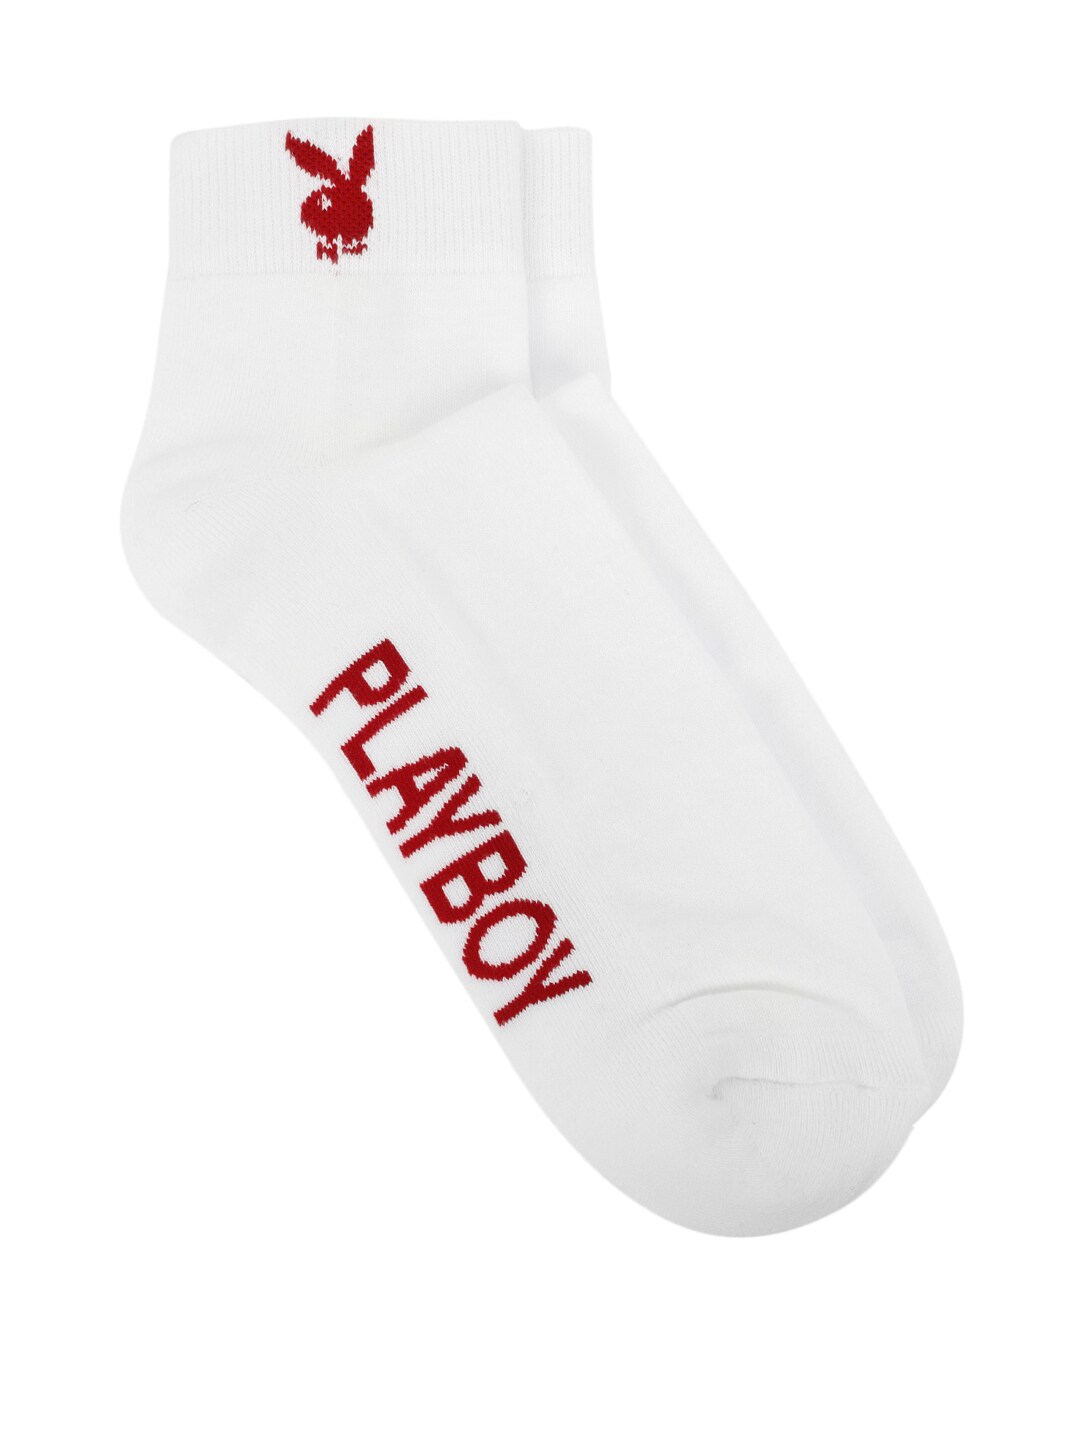 Playboy Men White Socks